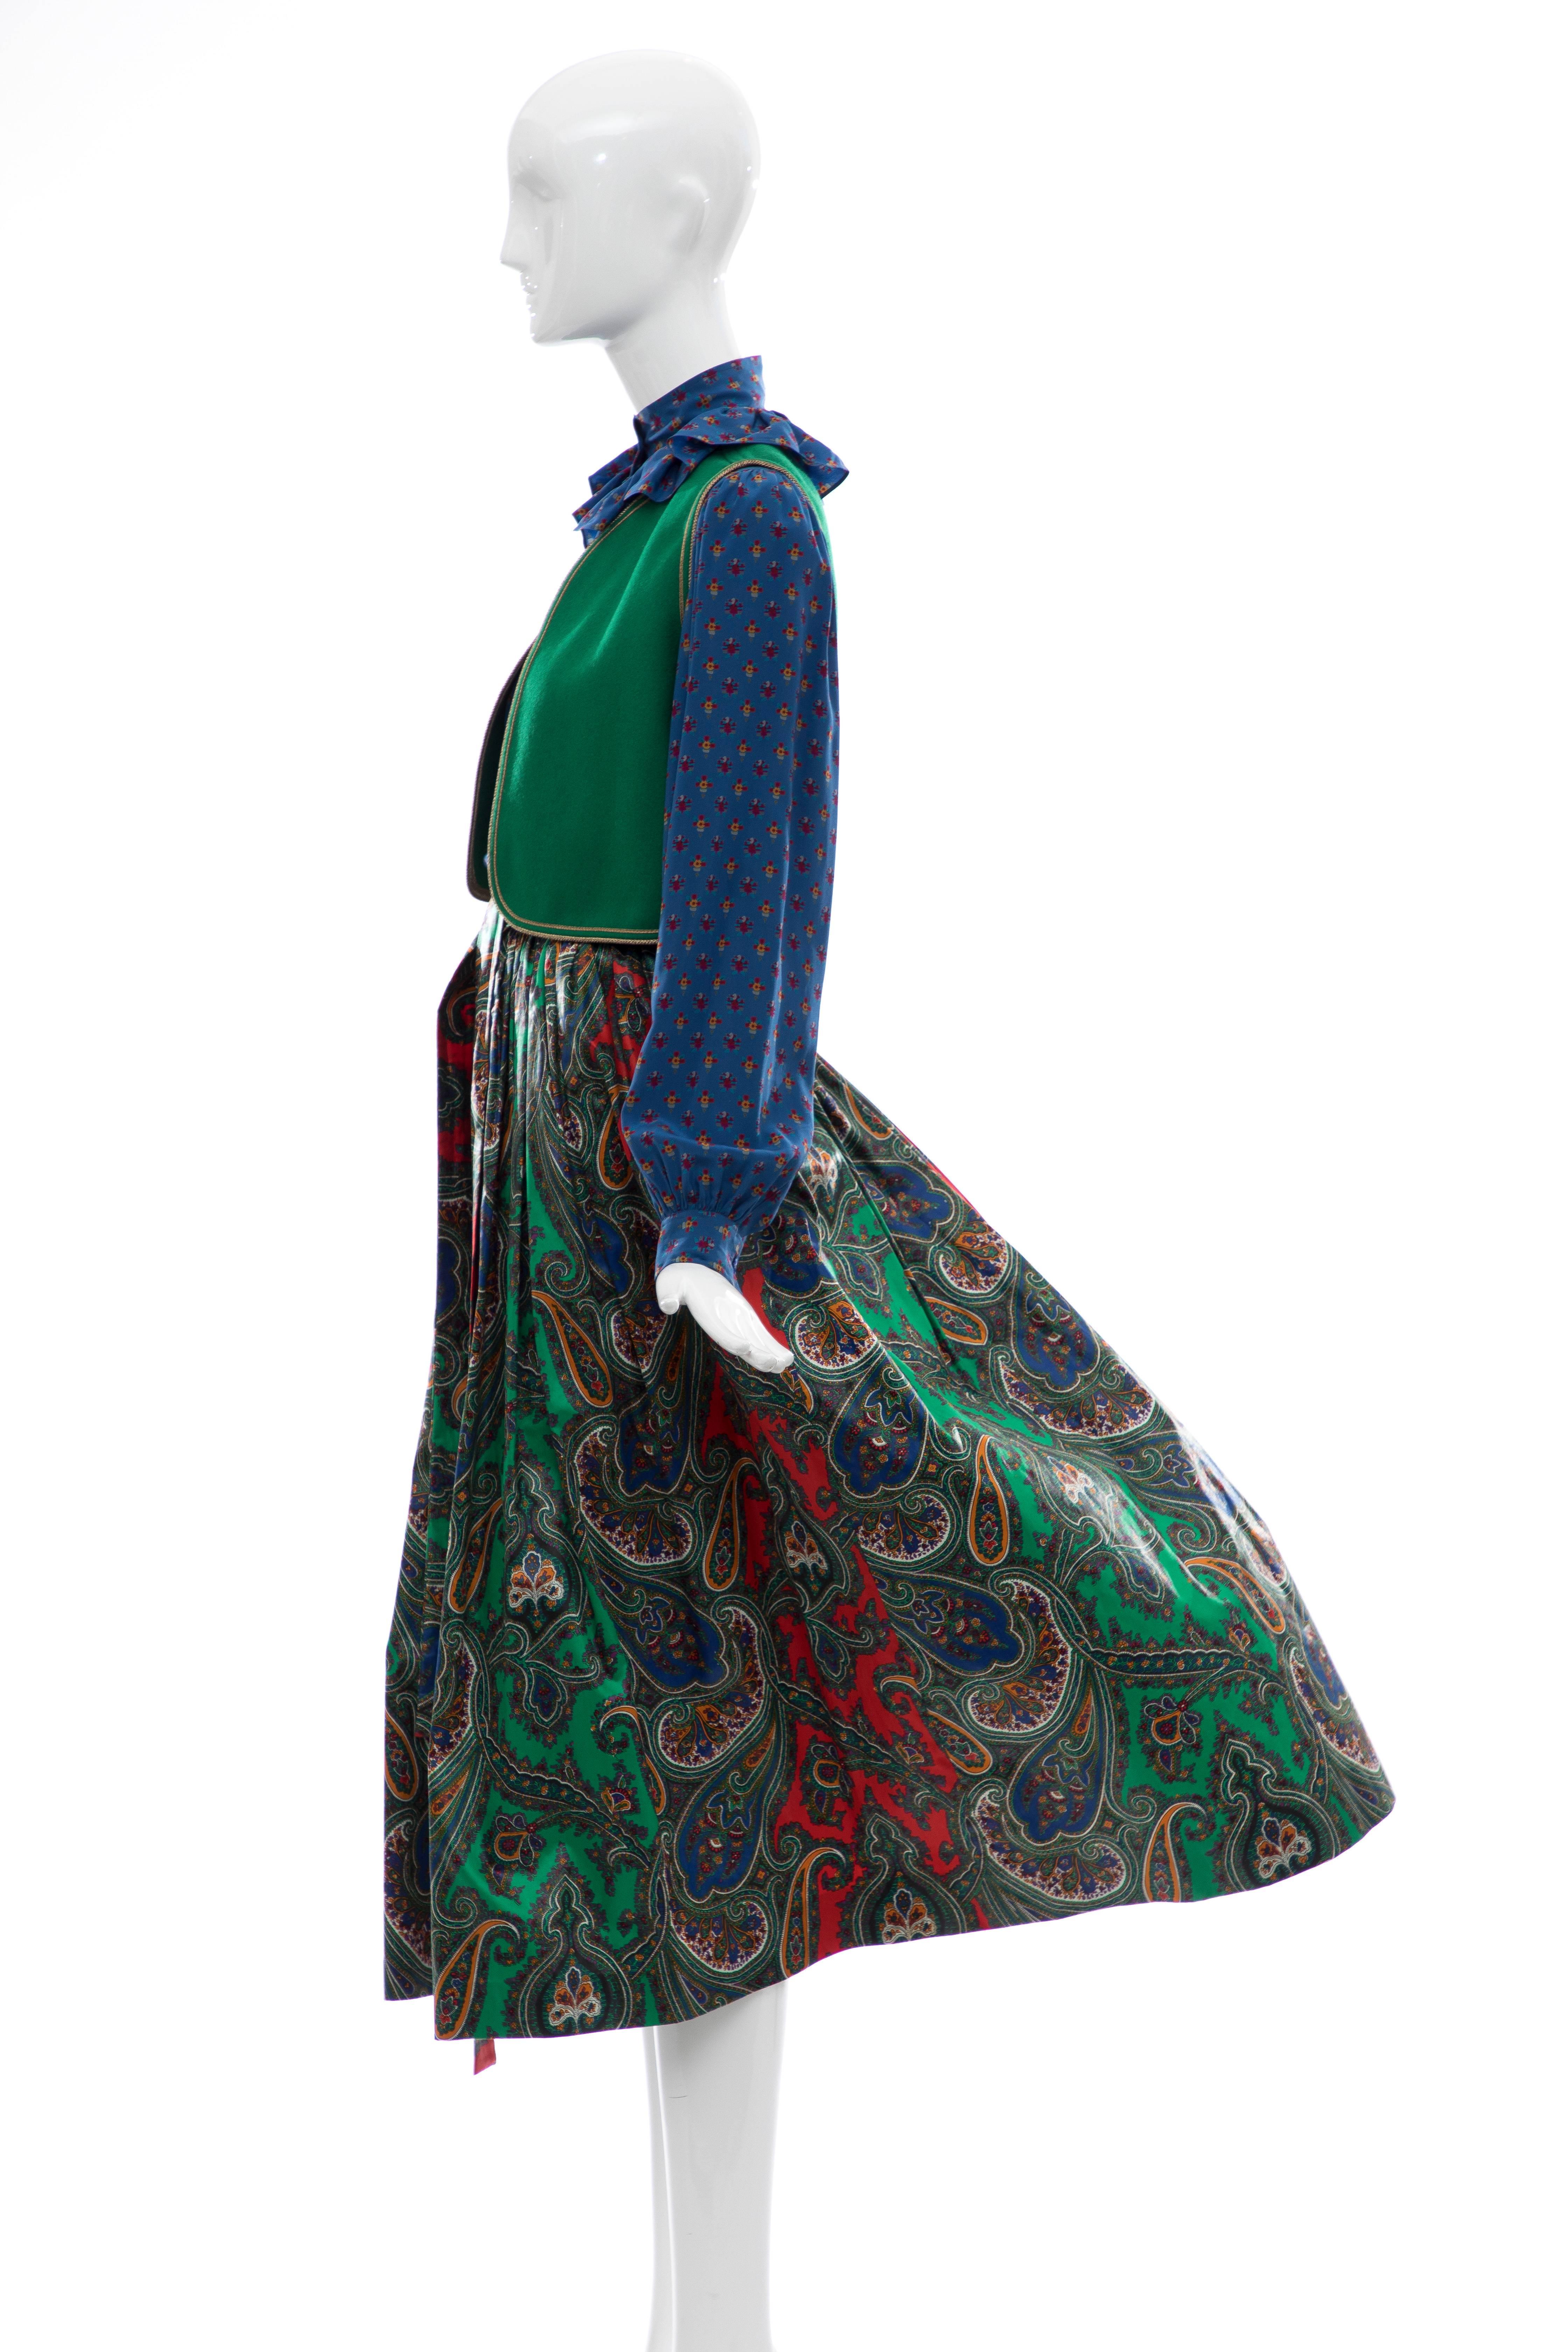 Yves Saint Laurent Rive Gauche Silk Cotton Sateen Wool Skirt Suit, Circa 1970s For Sale 3